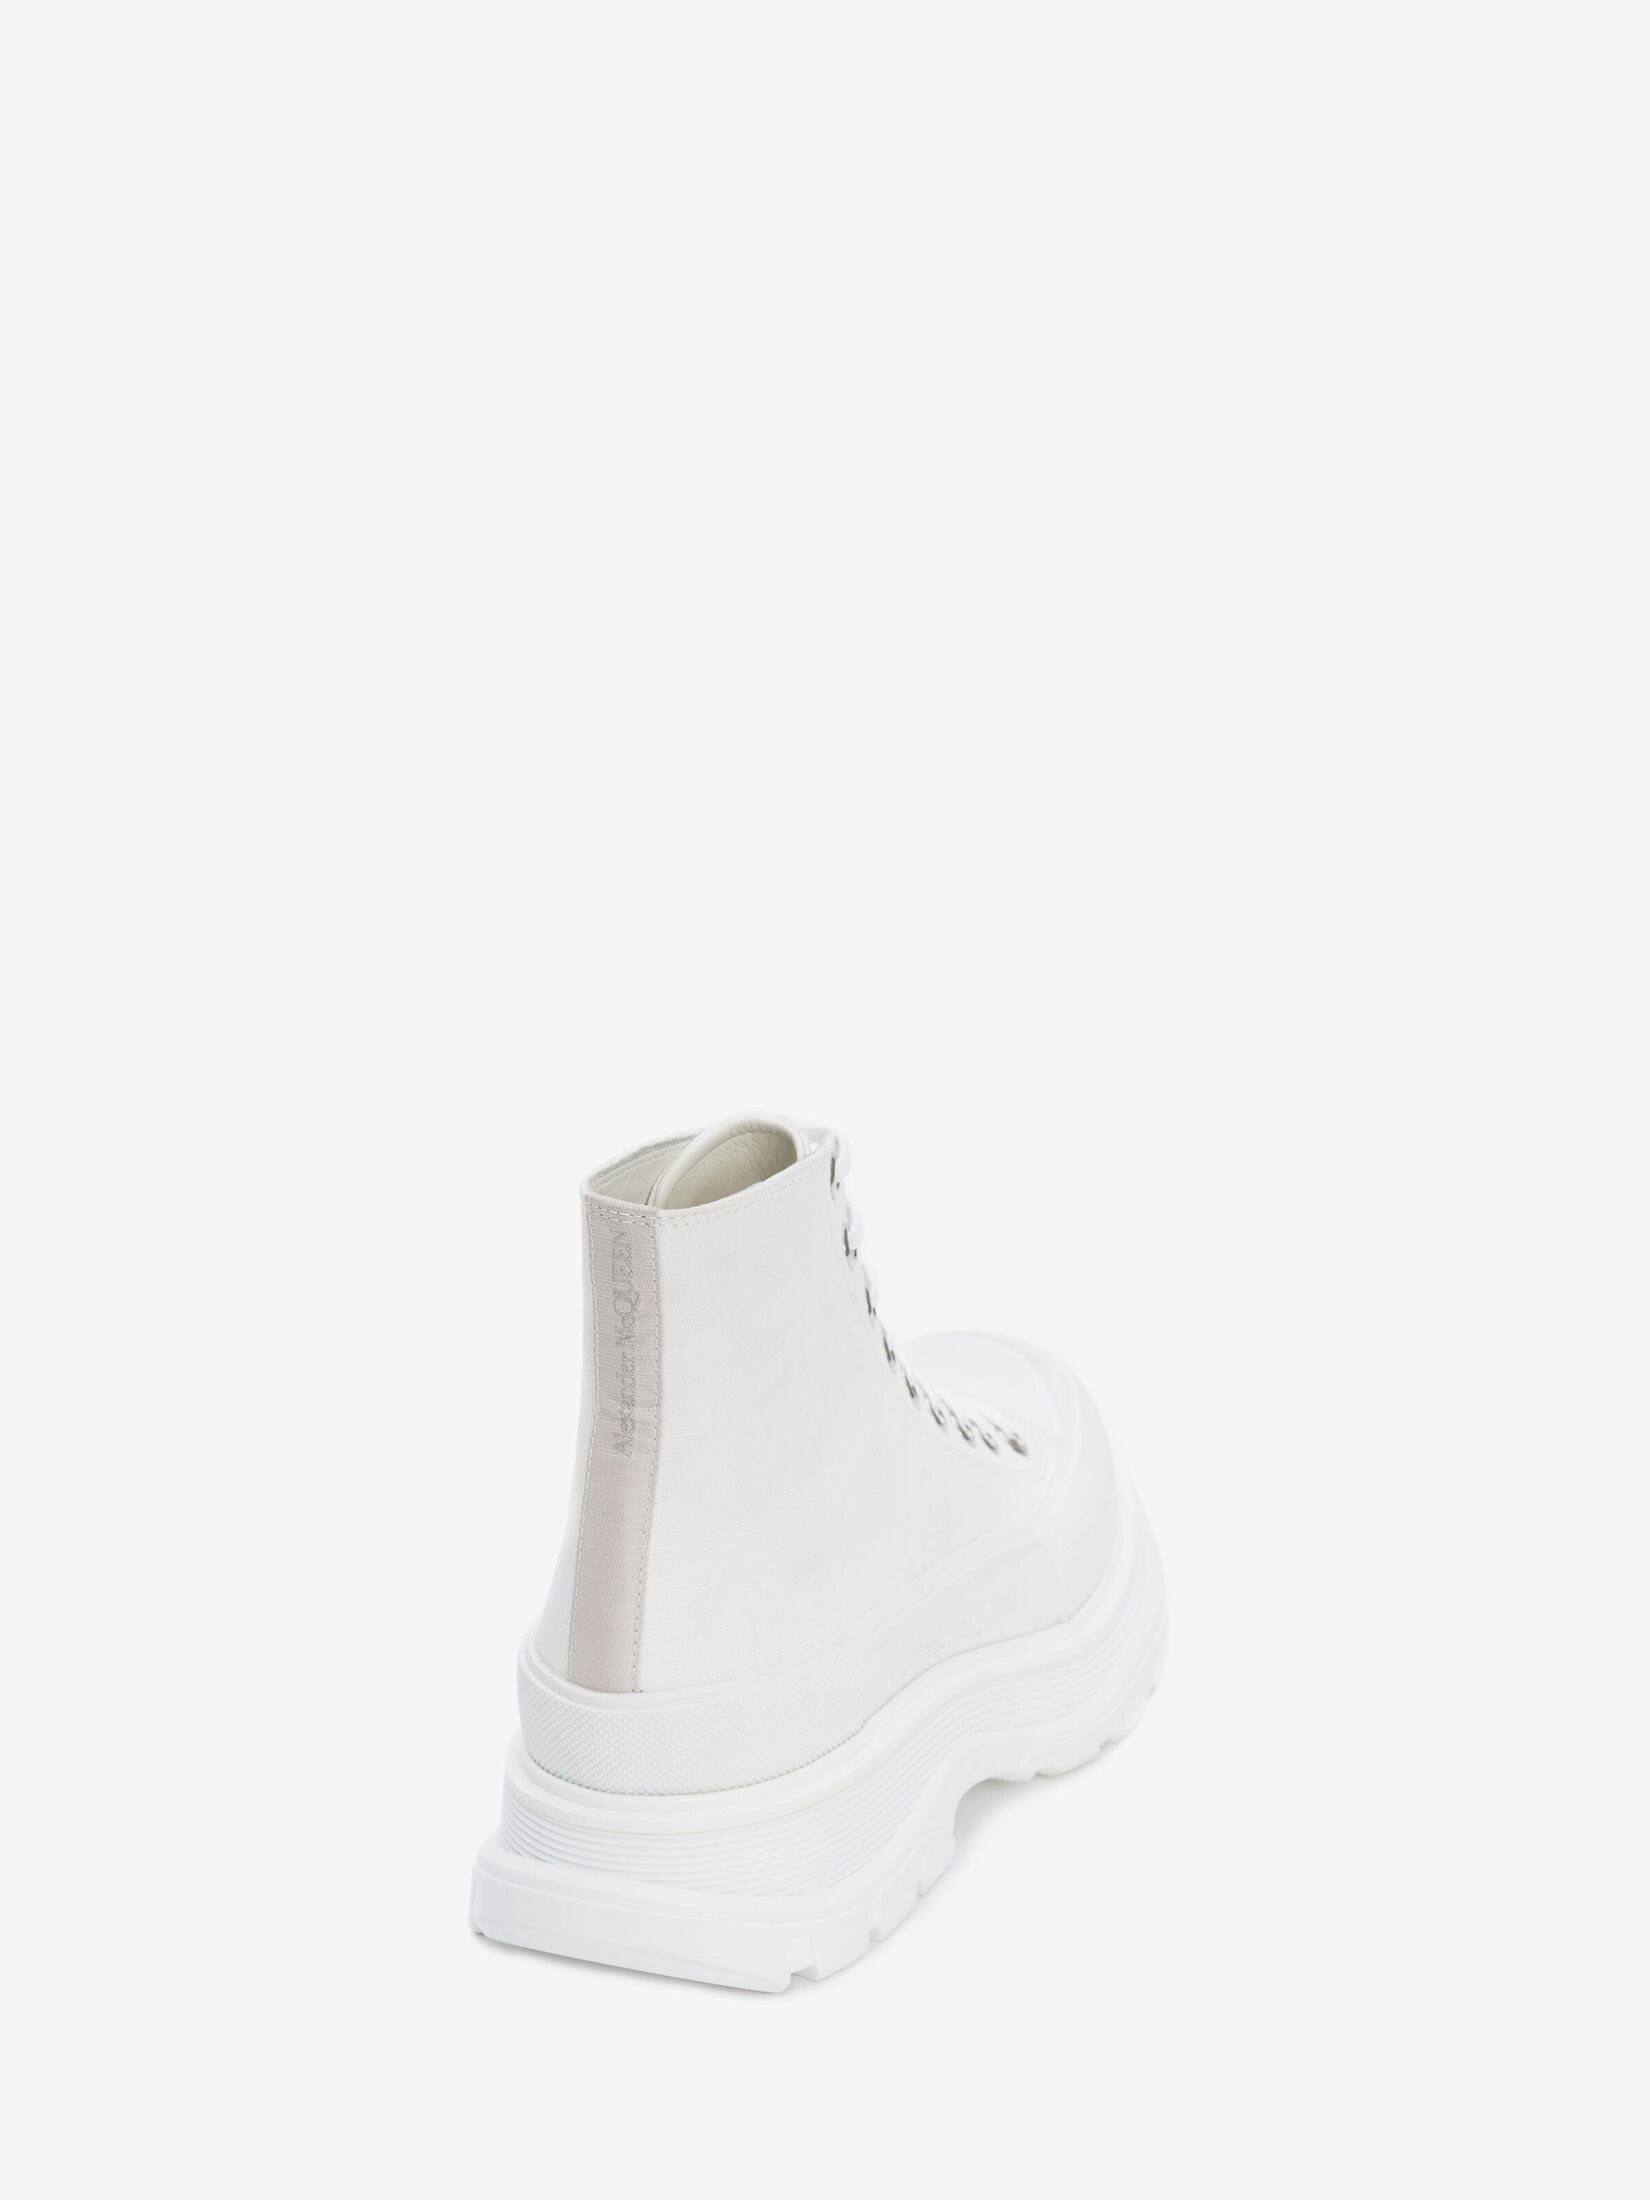 Women's Tread Slick Boot in White - 3